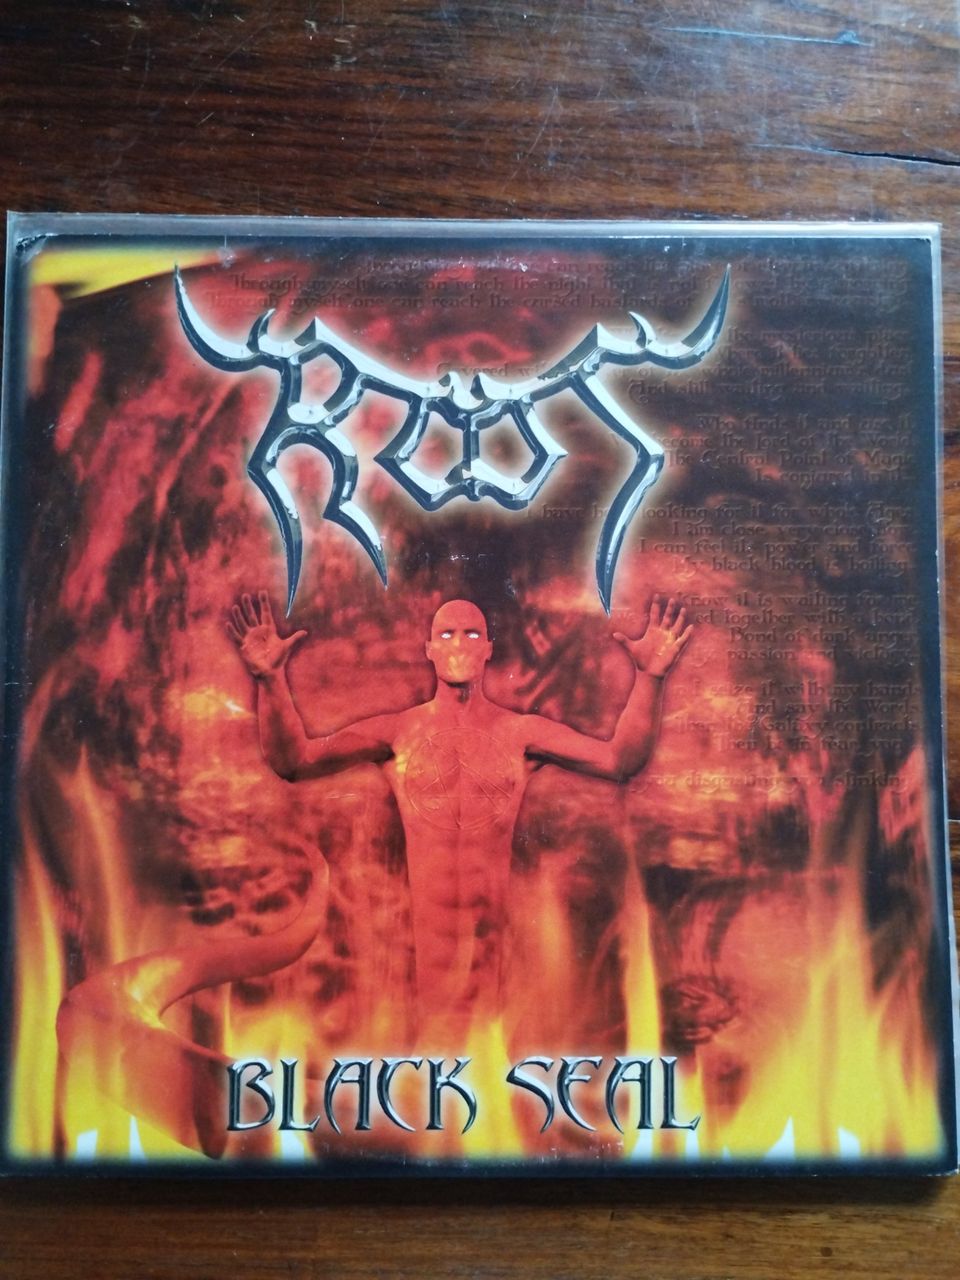 Root - Black seal